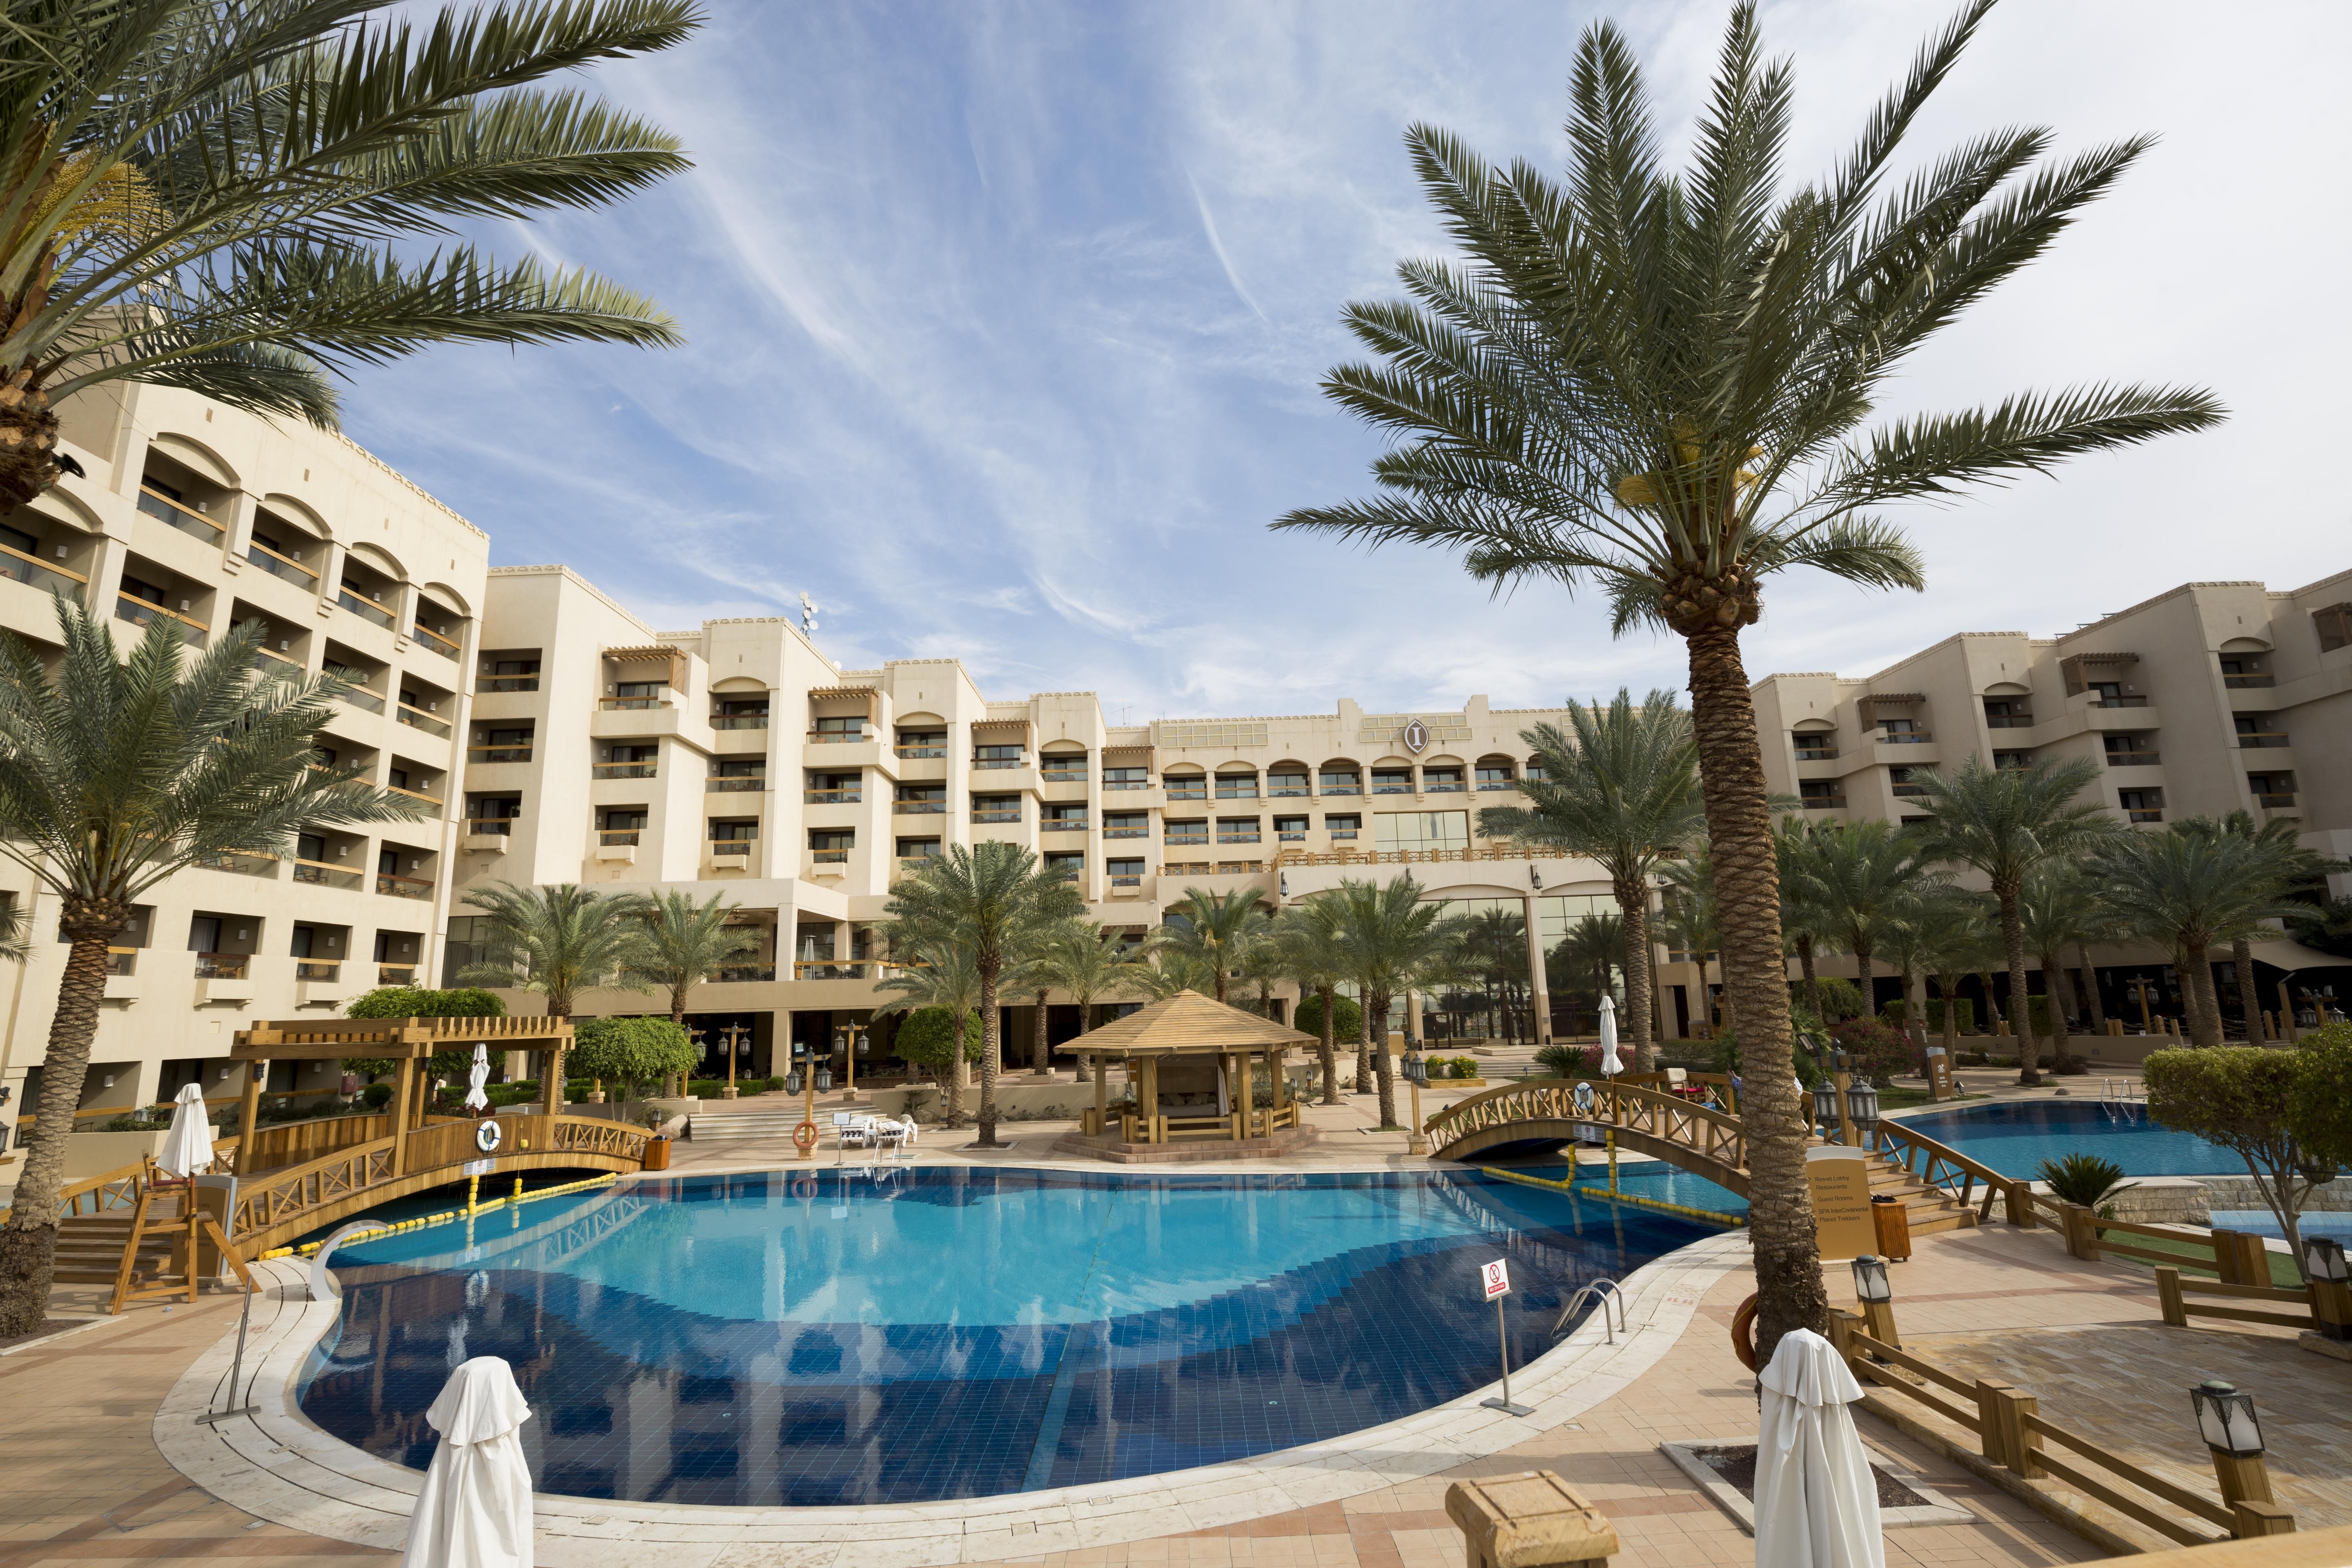 Obrázek hotelu Intercontinental Aqaba - ohne Reiseleitung